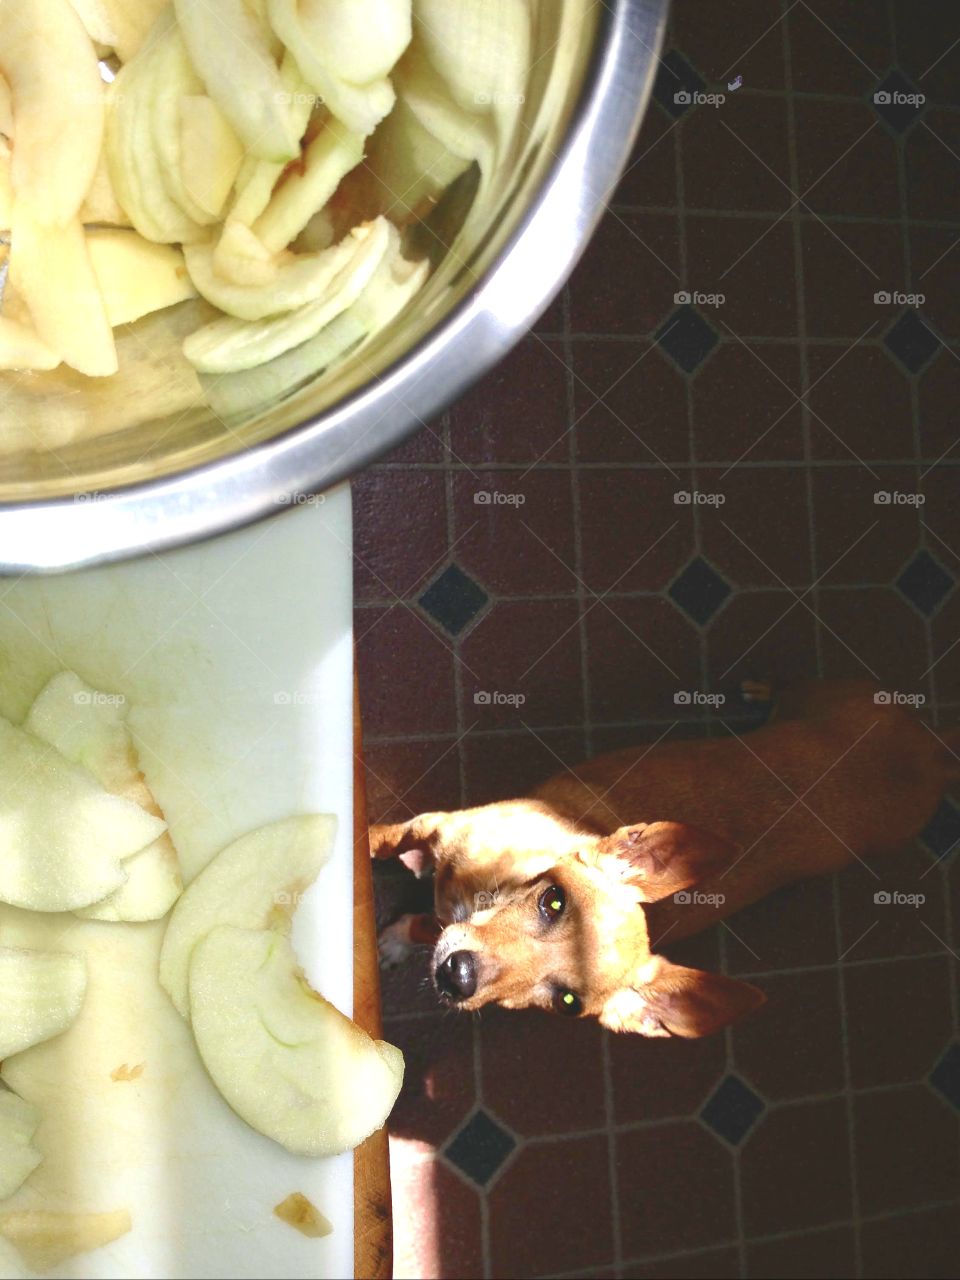 Puppy hoping apple slice falls to floor as pie is being prepared.